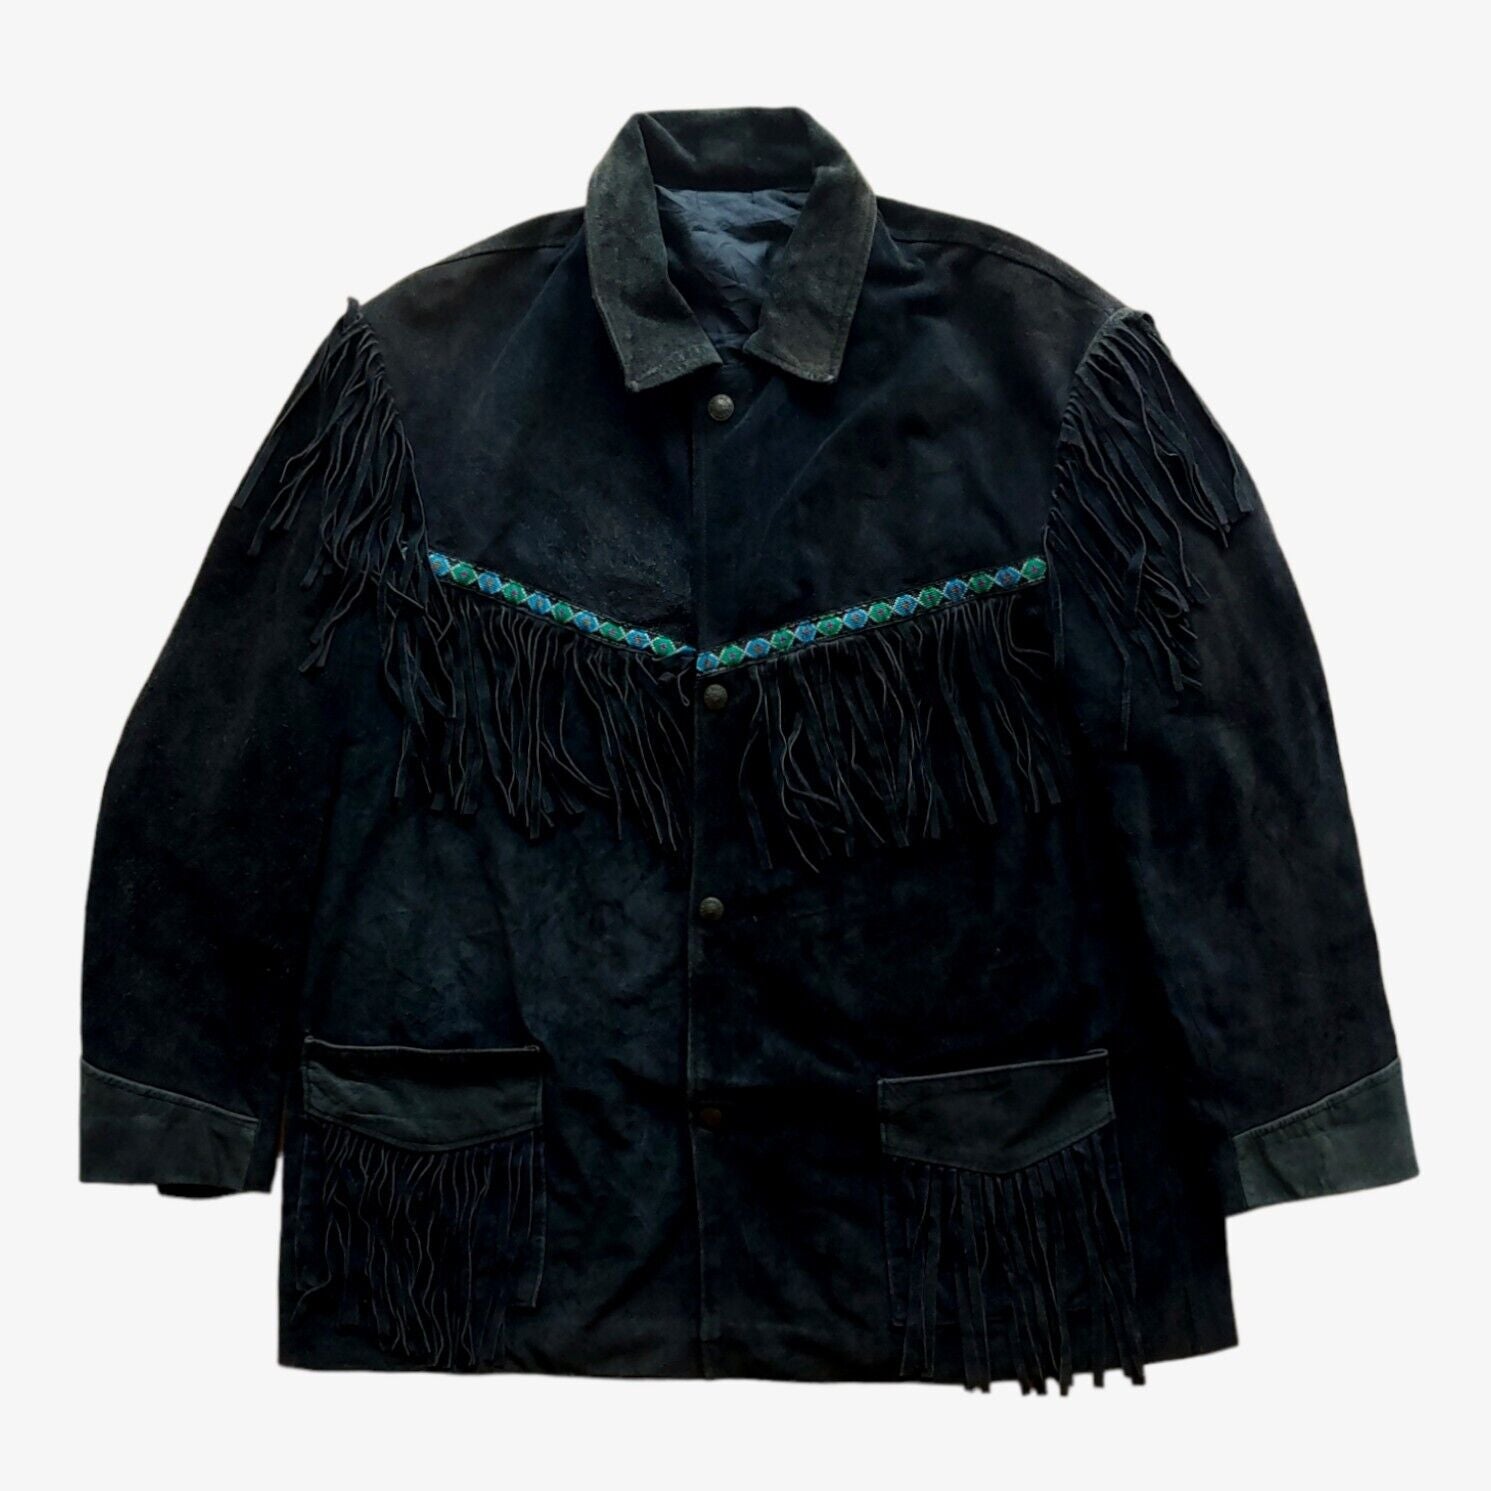 Vintage 1980s Western Fringe Jacket With Embroidered Eagle Front - Casspios Dream